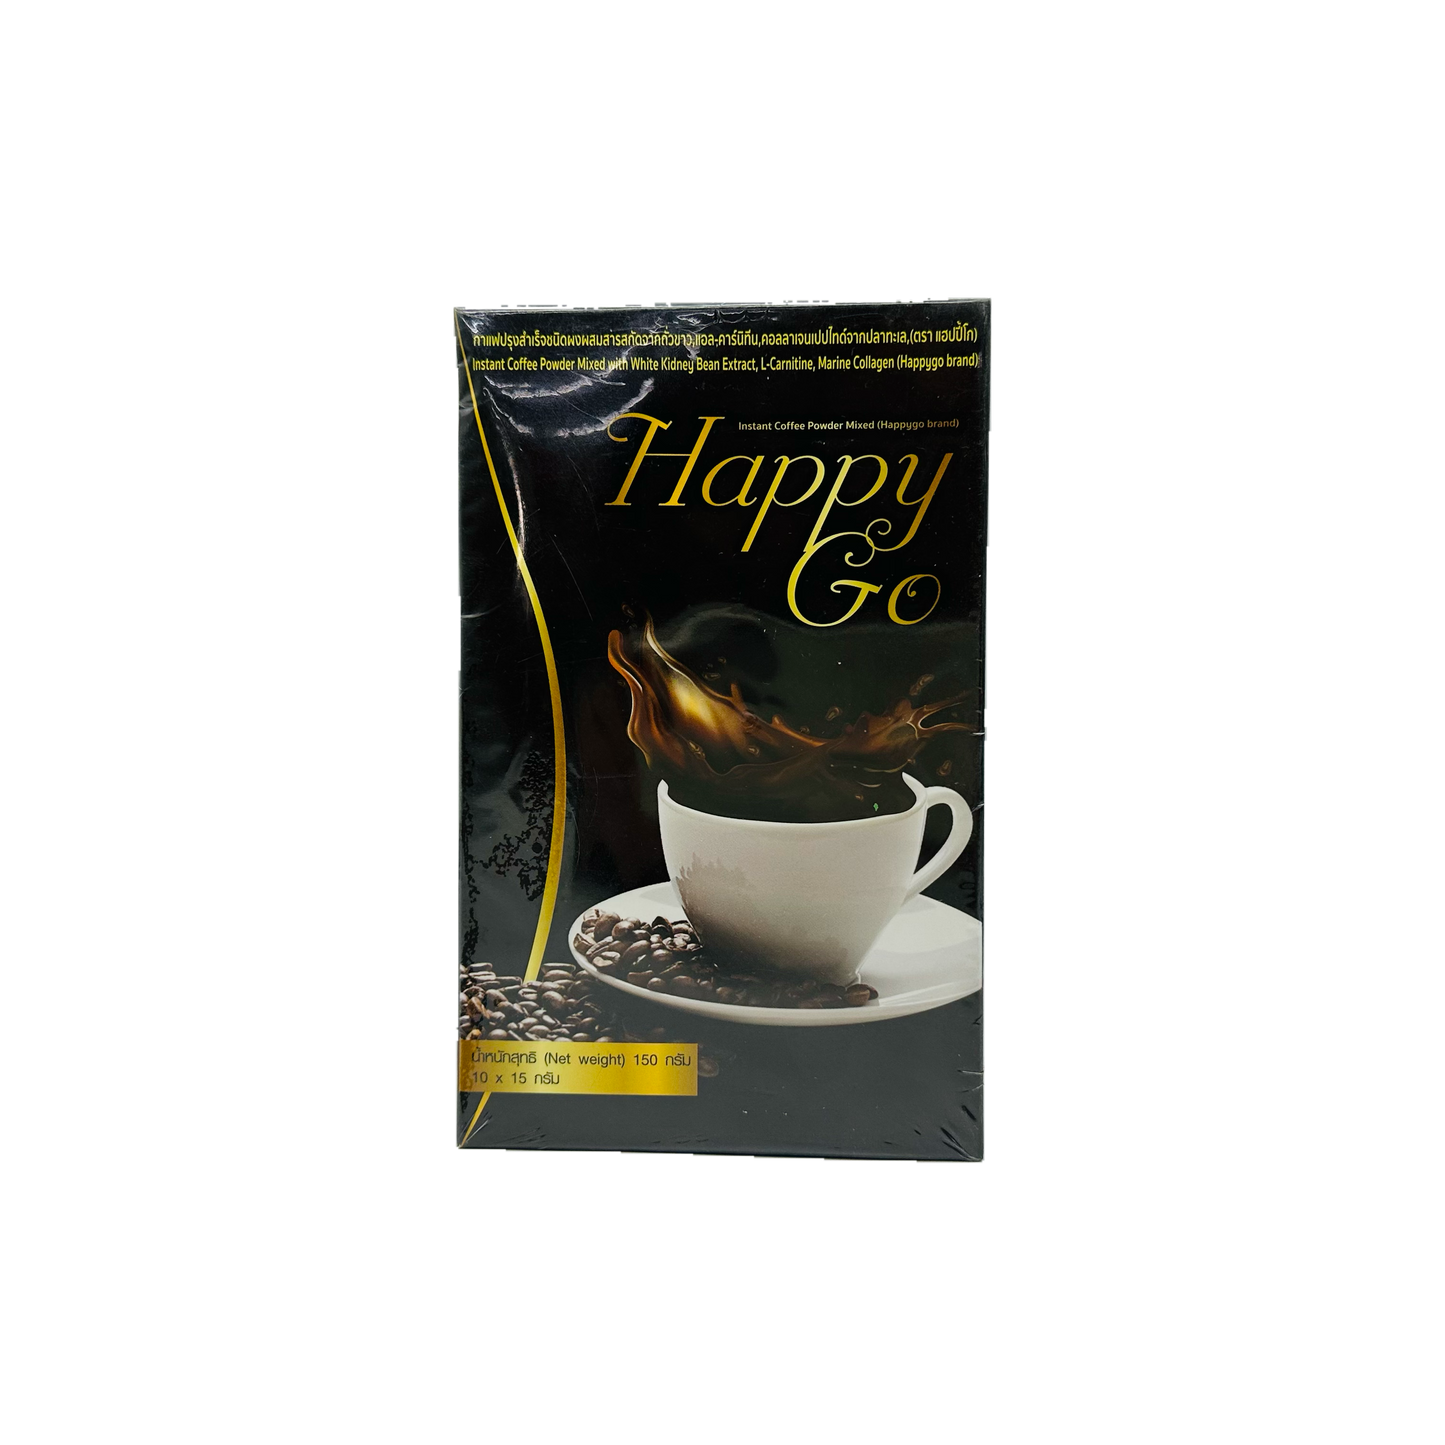 Happy Go (Instant Coffee Powder Mixed)